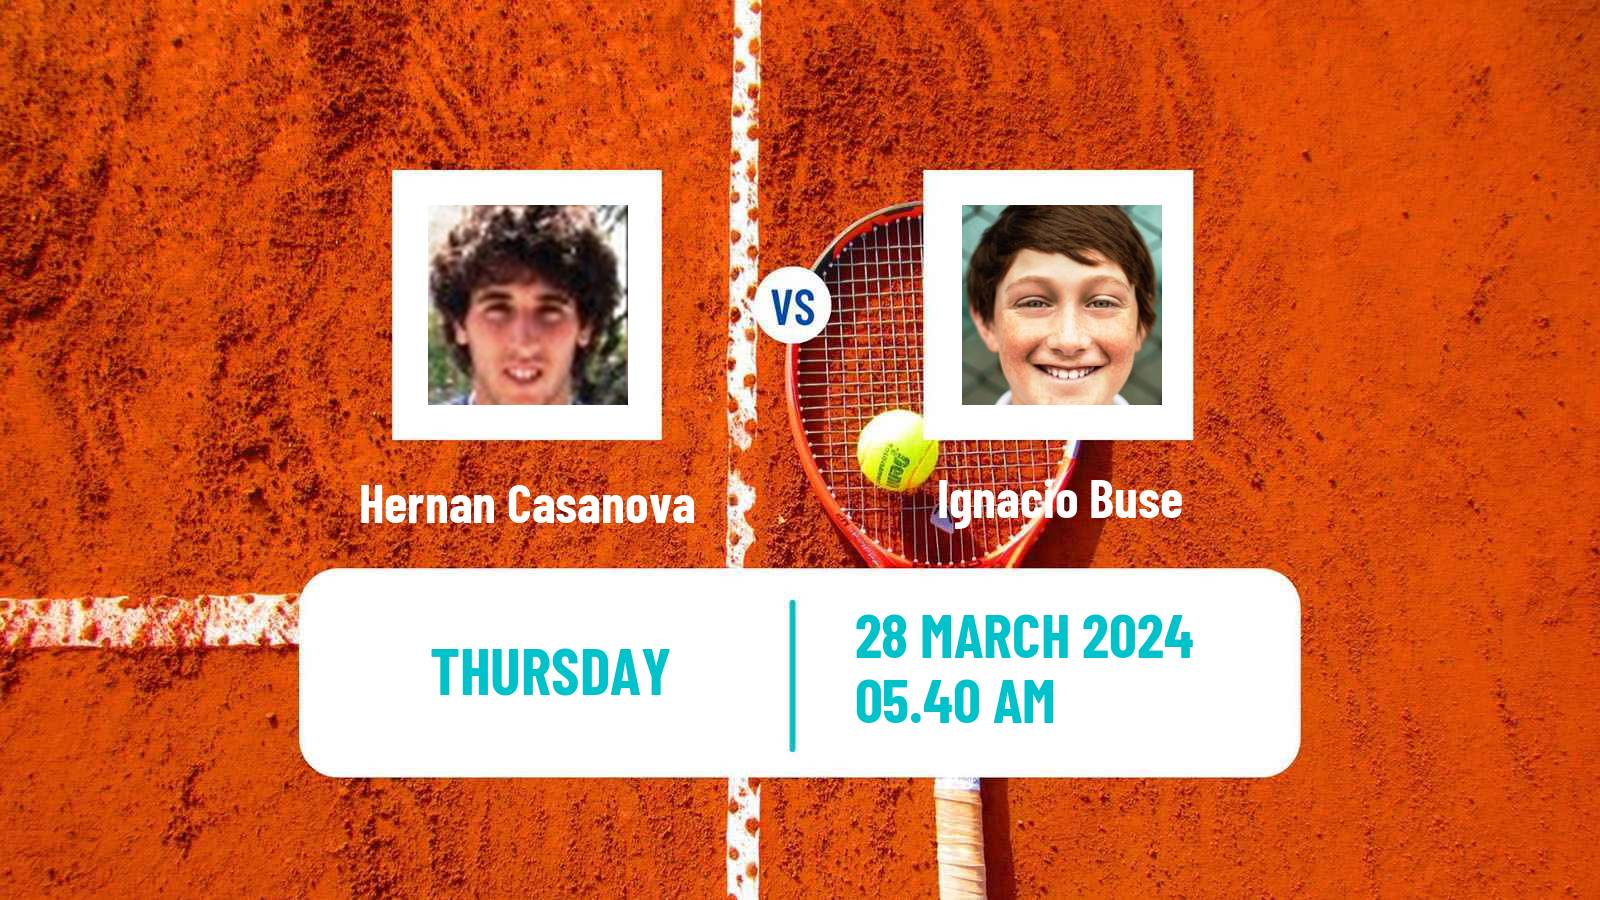 Tennis ITF M25 Tarragona Men Hernan Casanova - Ignacio Buse